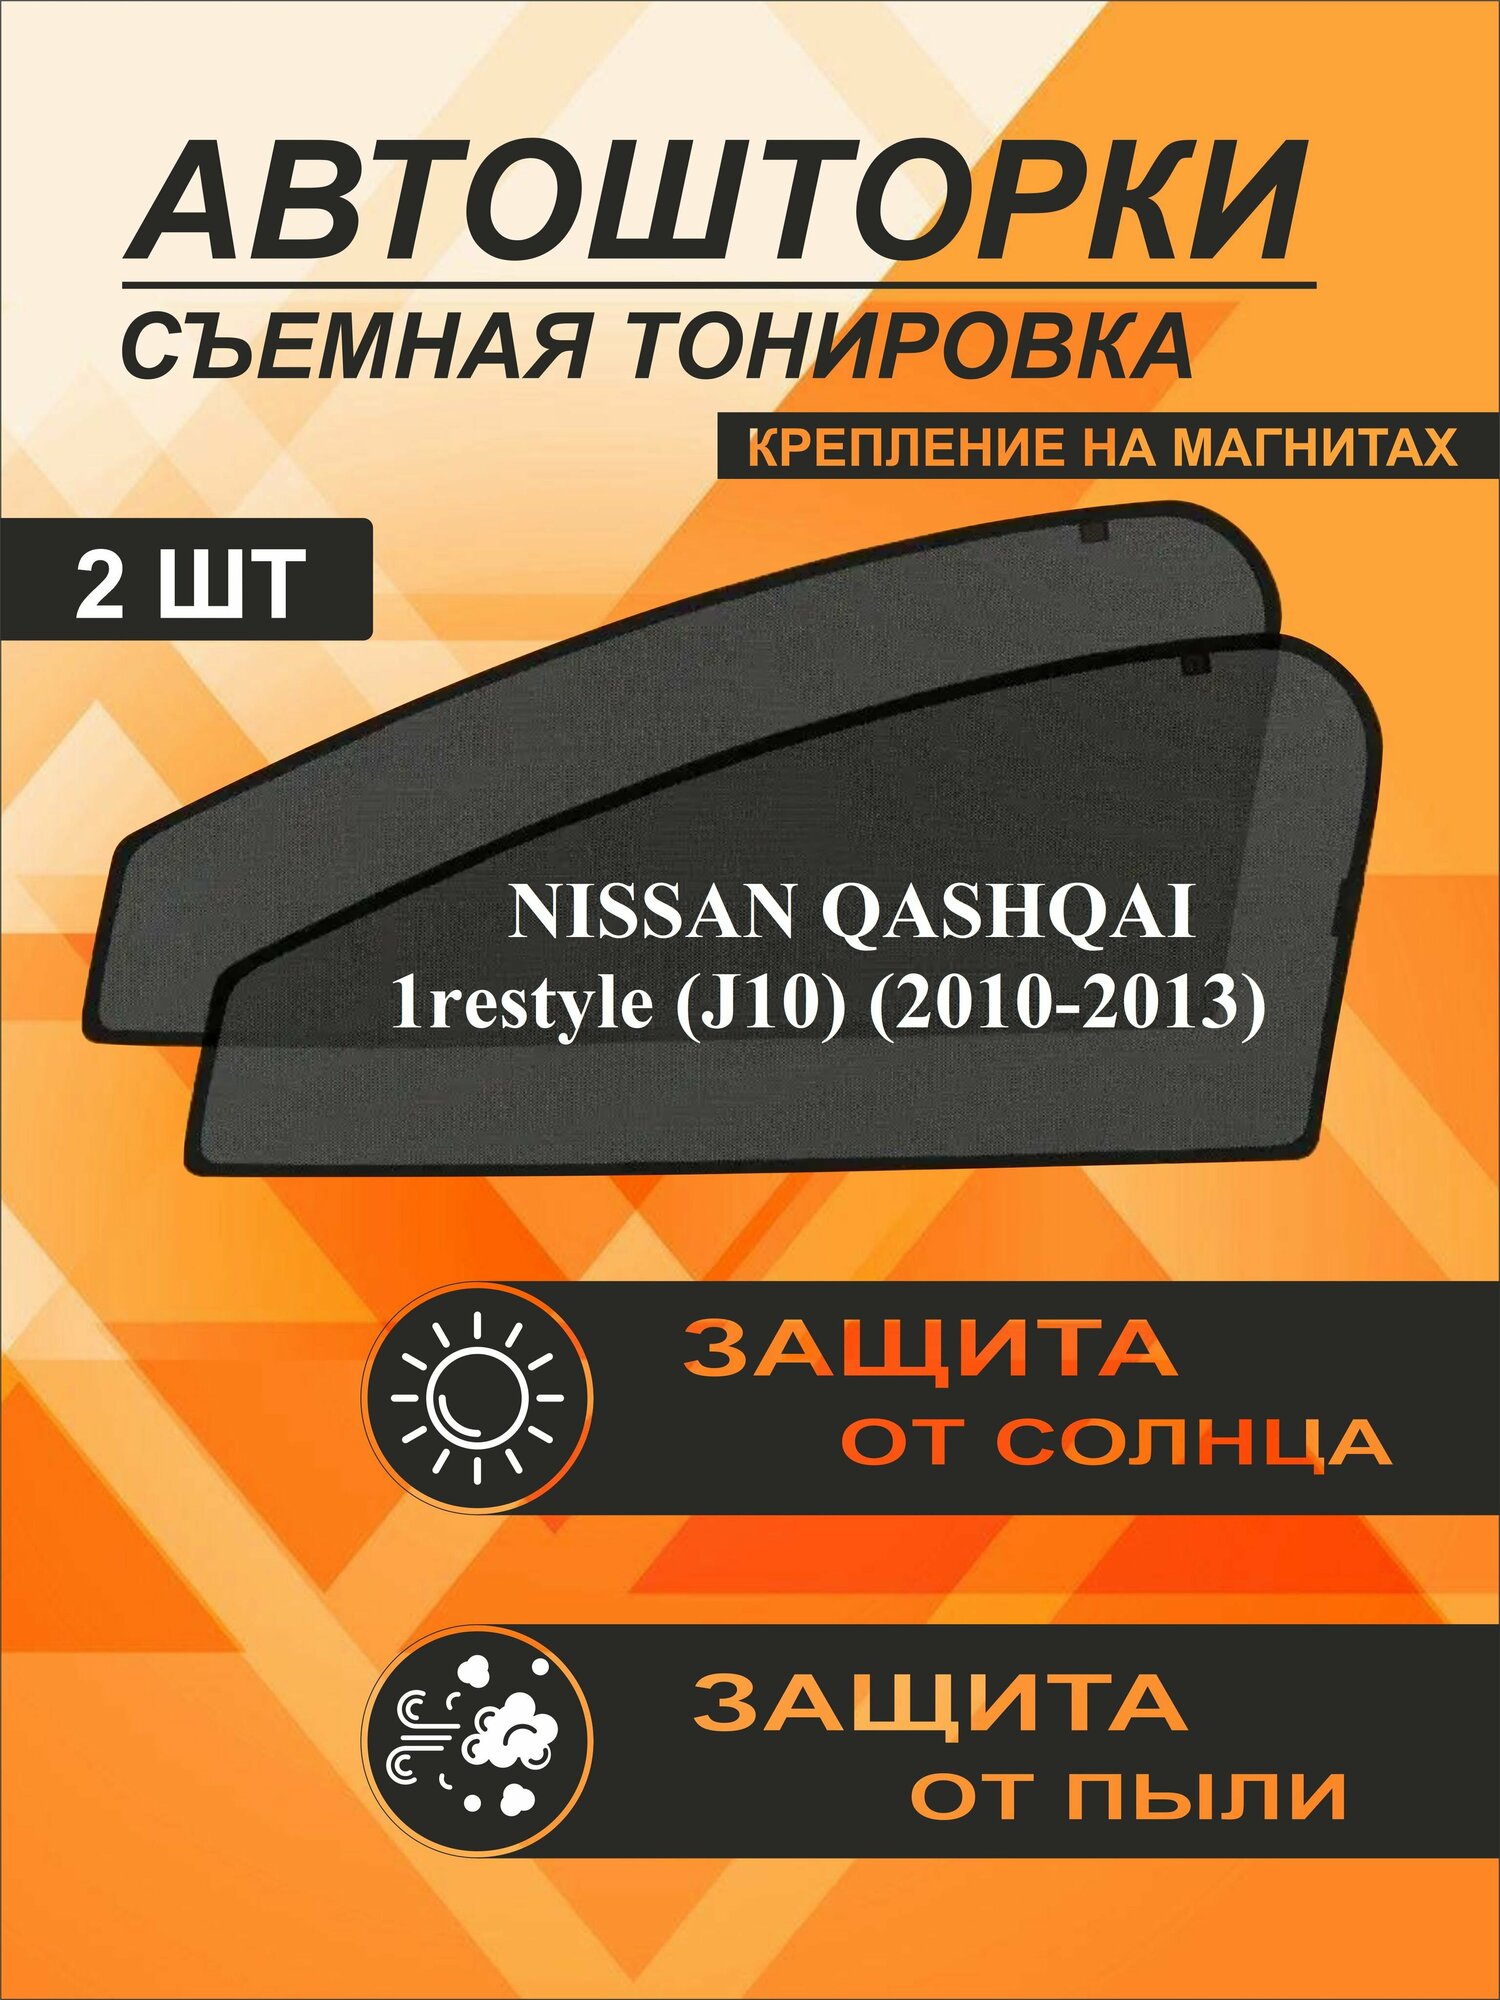 Автошторки на Nissan Qashqai 1 restyle(J10)(2010-2013)